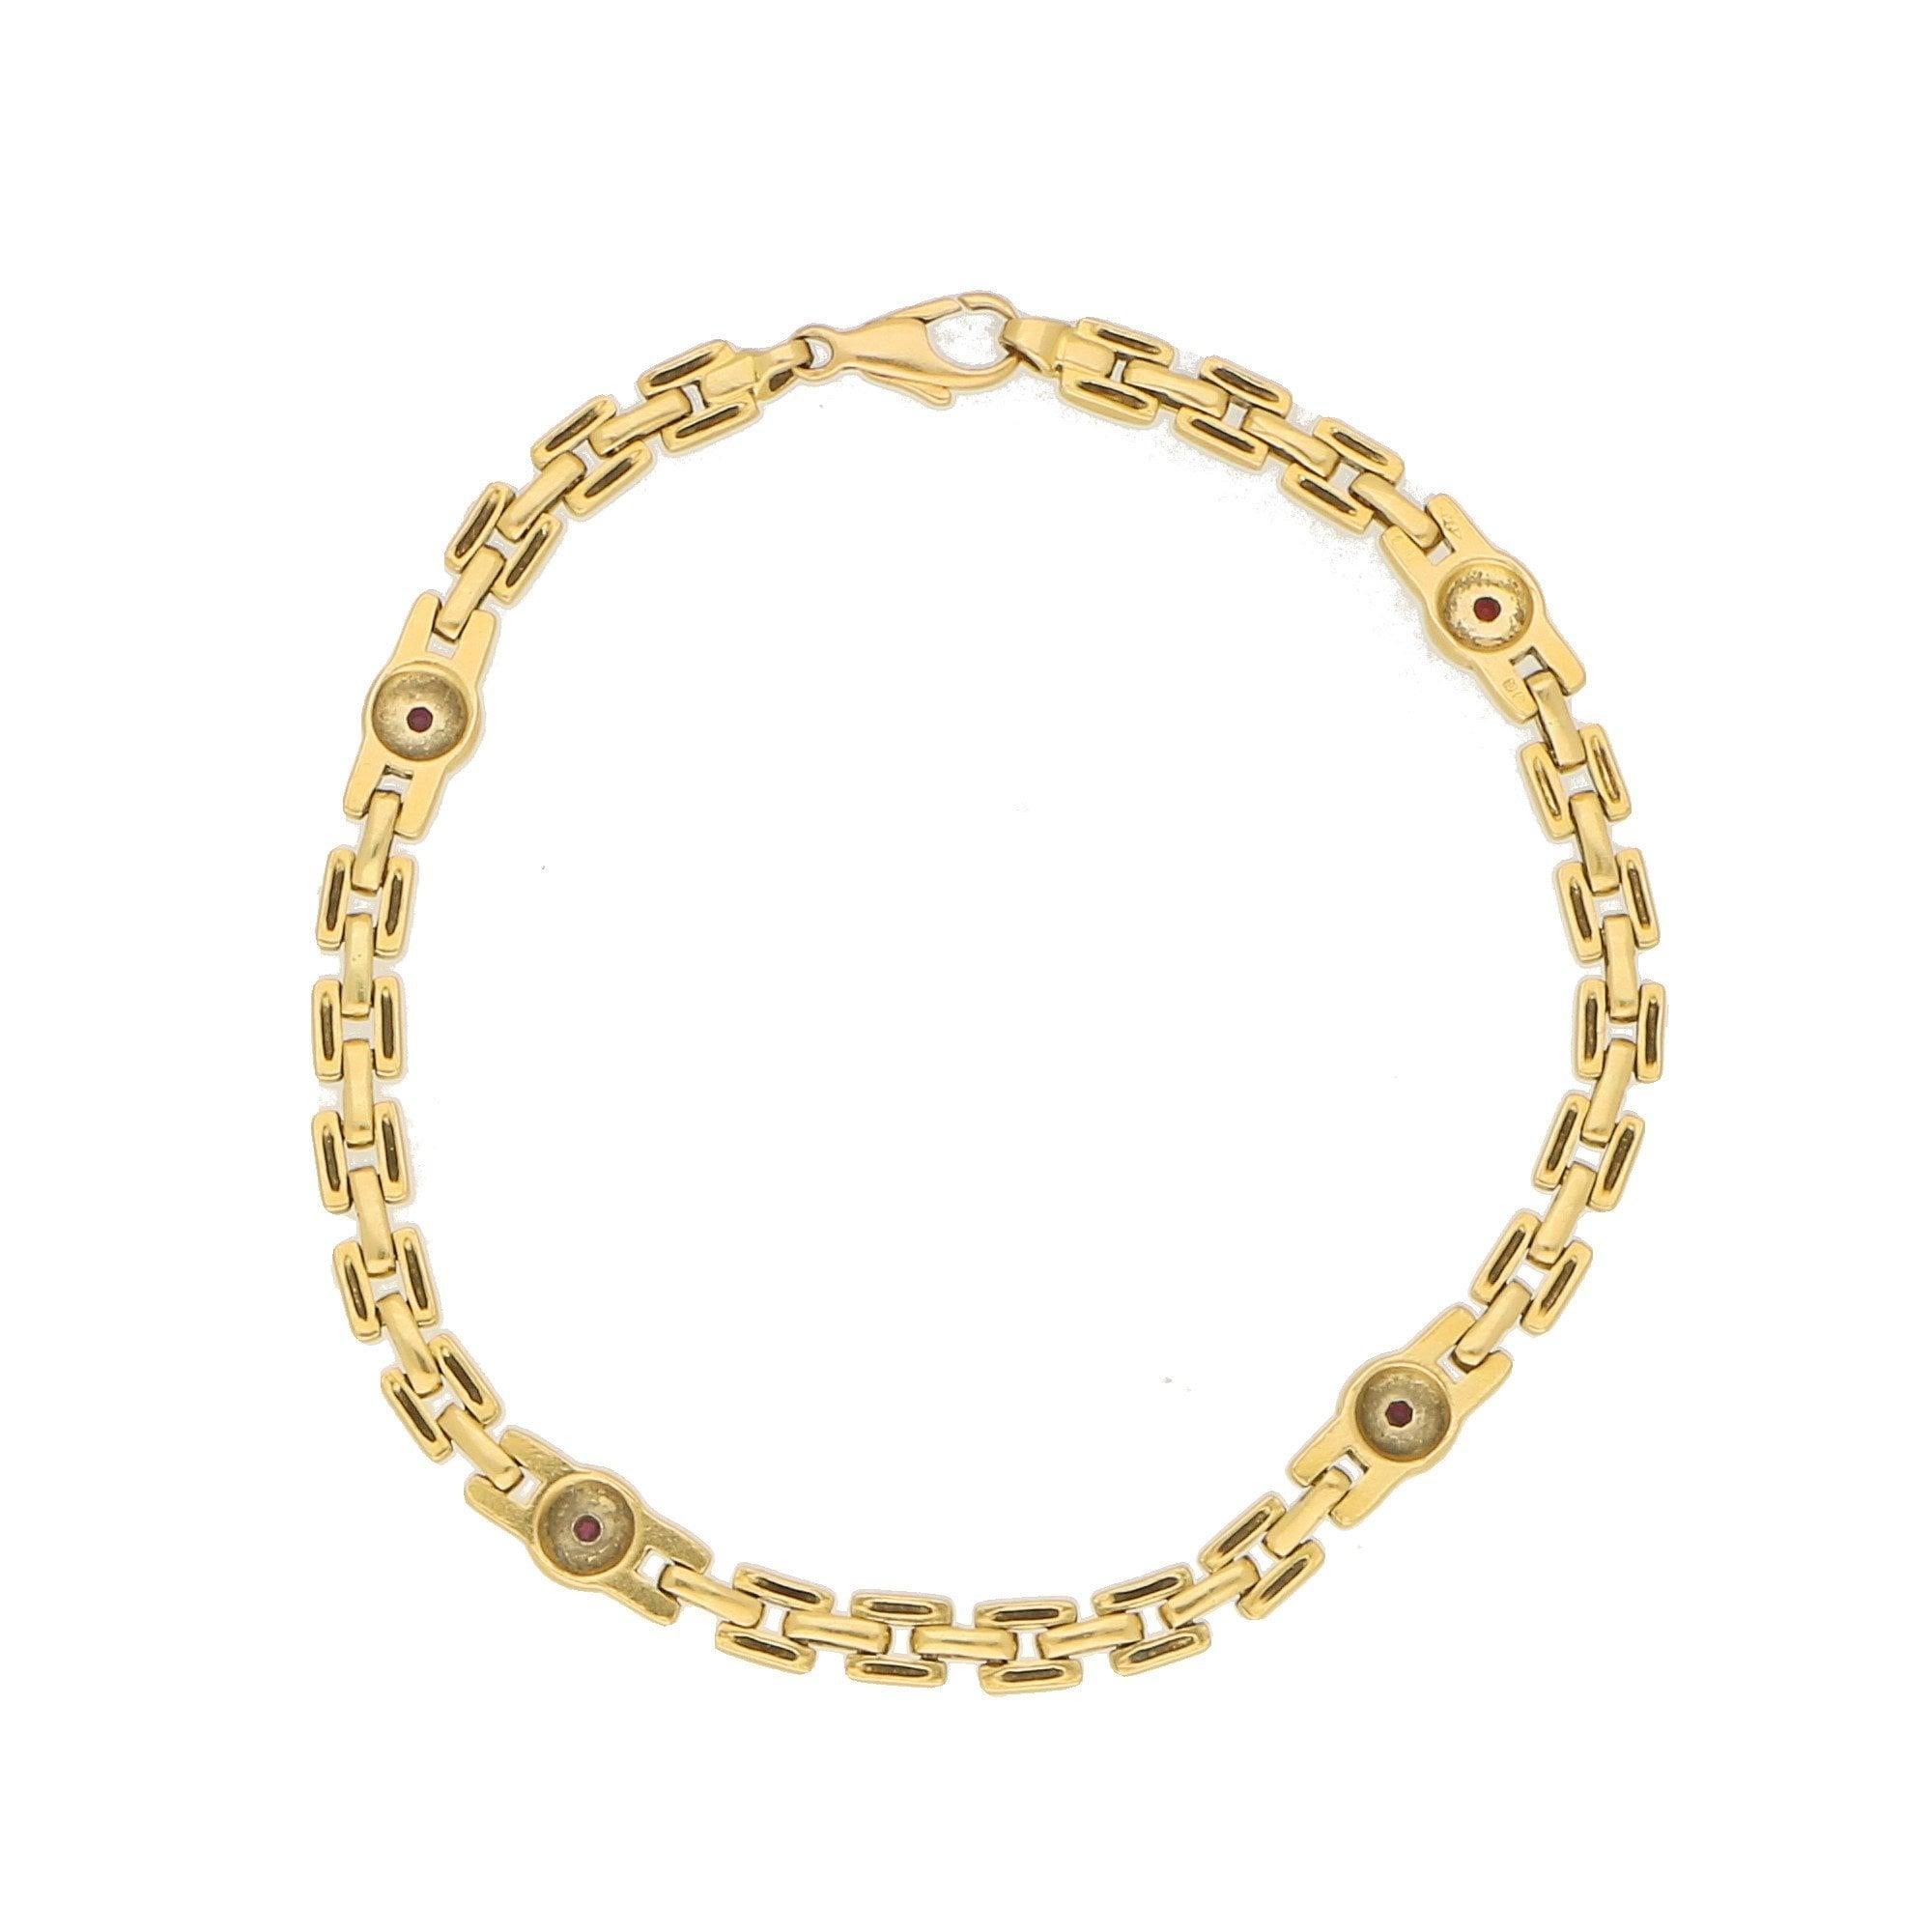 Round Cut Red Ruby Chain Link Bracelet Set in 18 Karat Yellow Gold